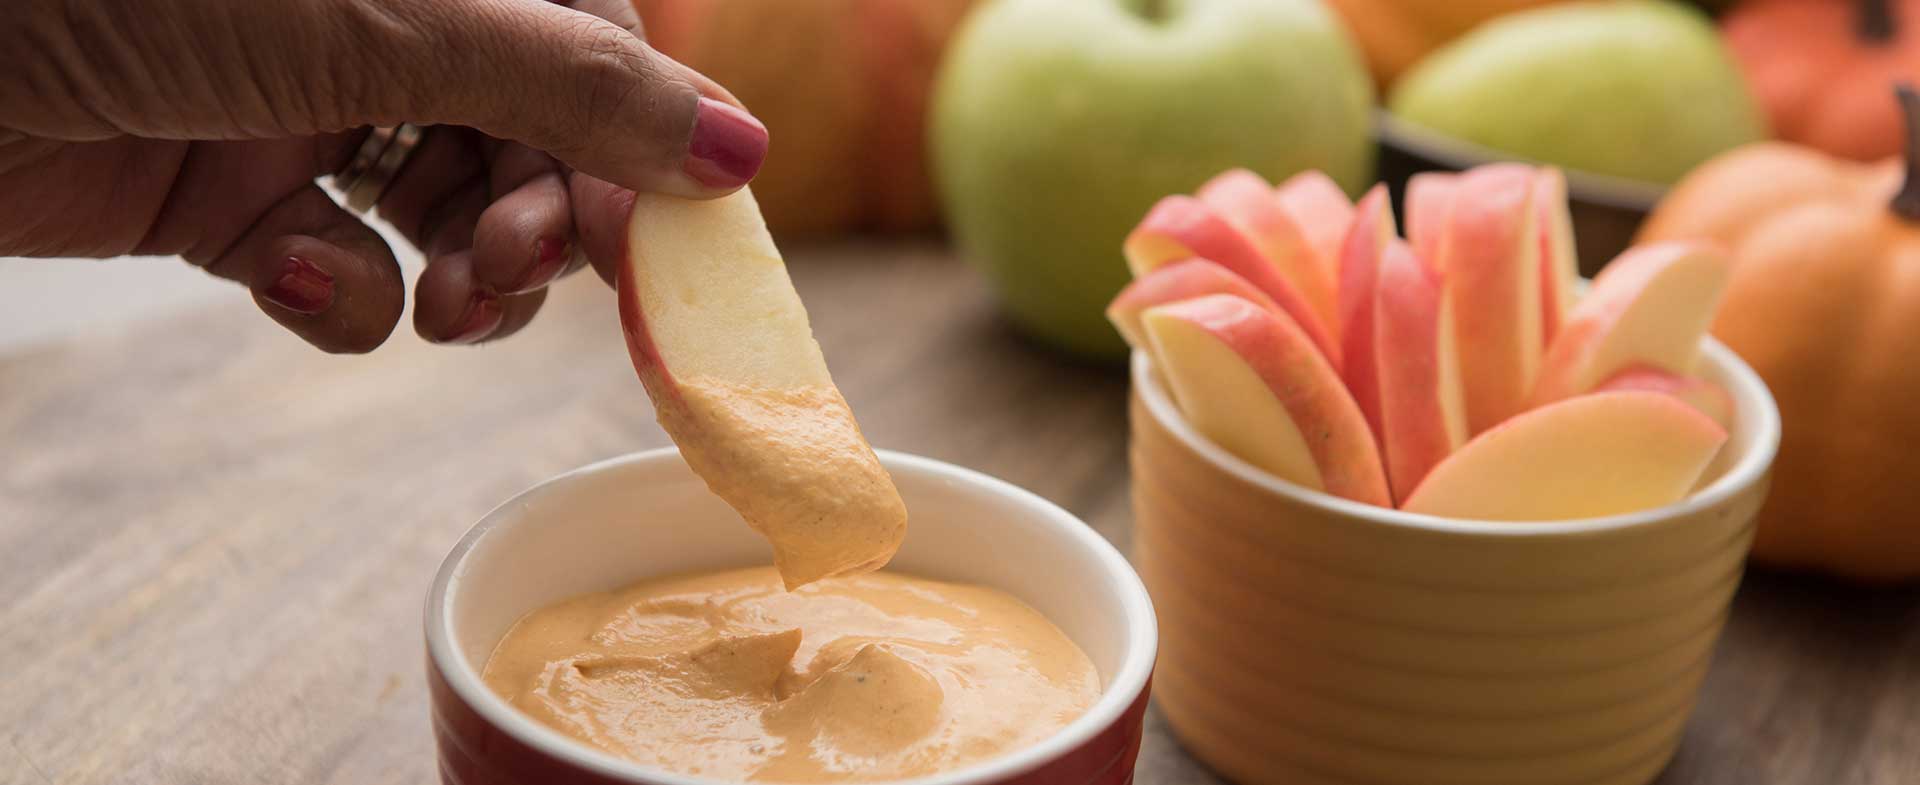 Hand scooping creamy pumpkin dip with an apple slice